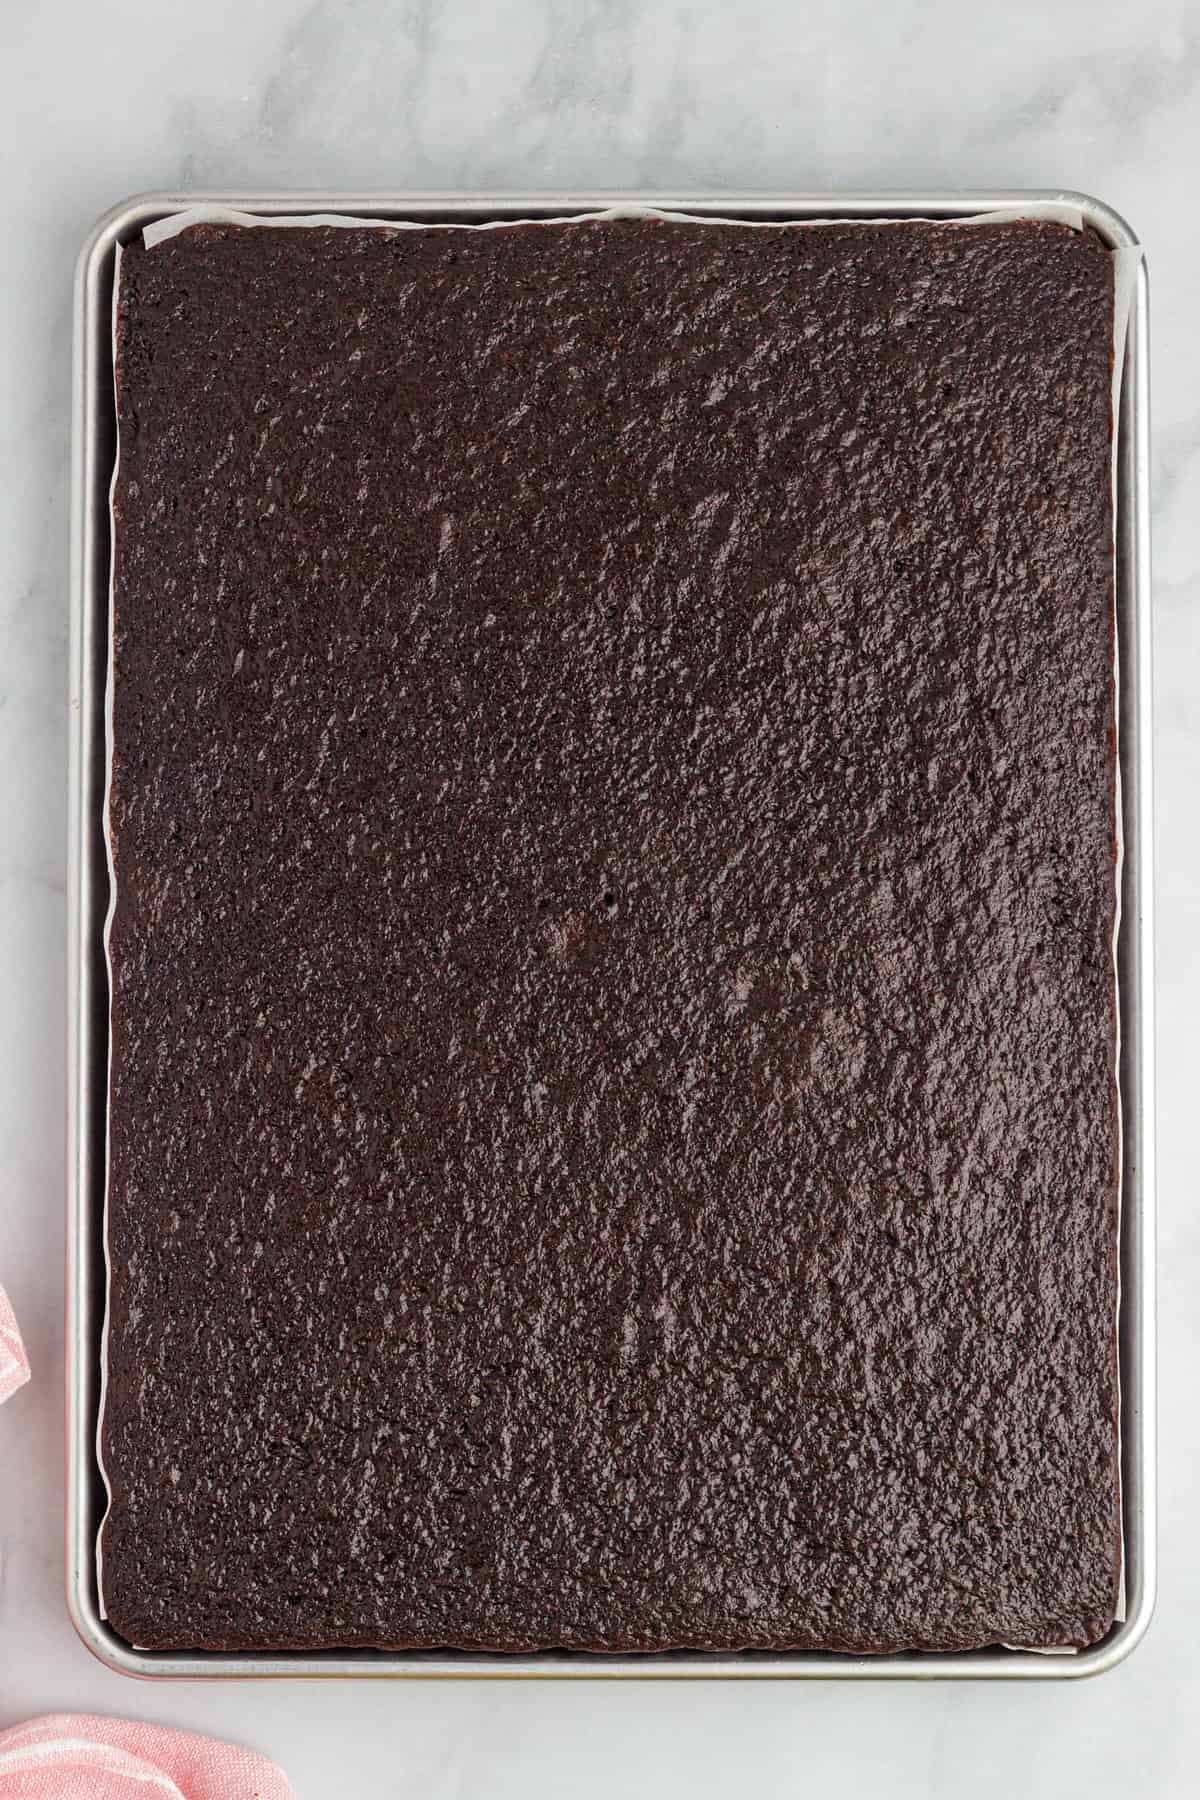 Baked Chocolate Sheet Cake Recipe